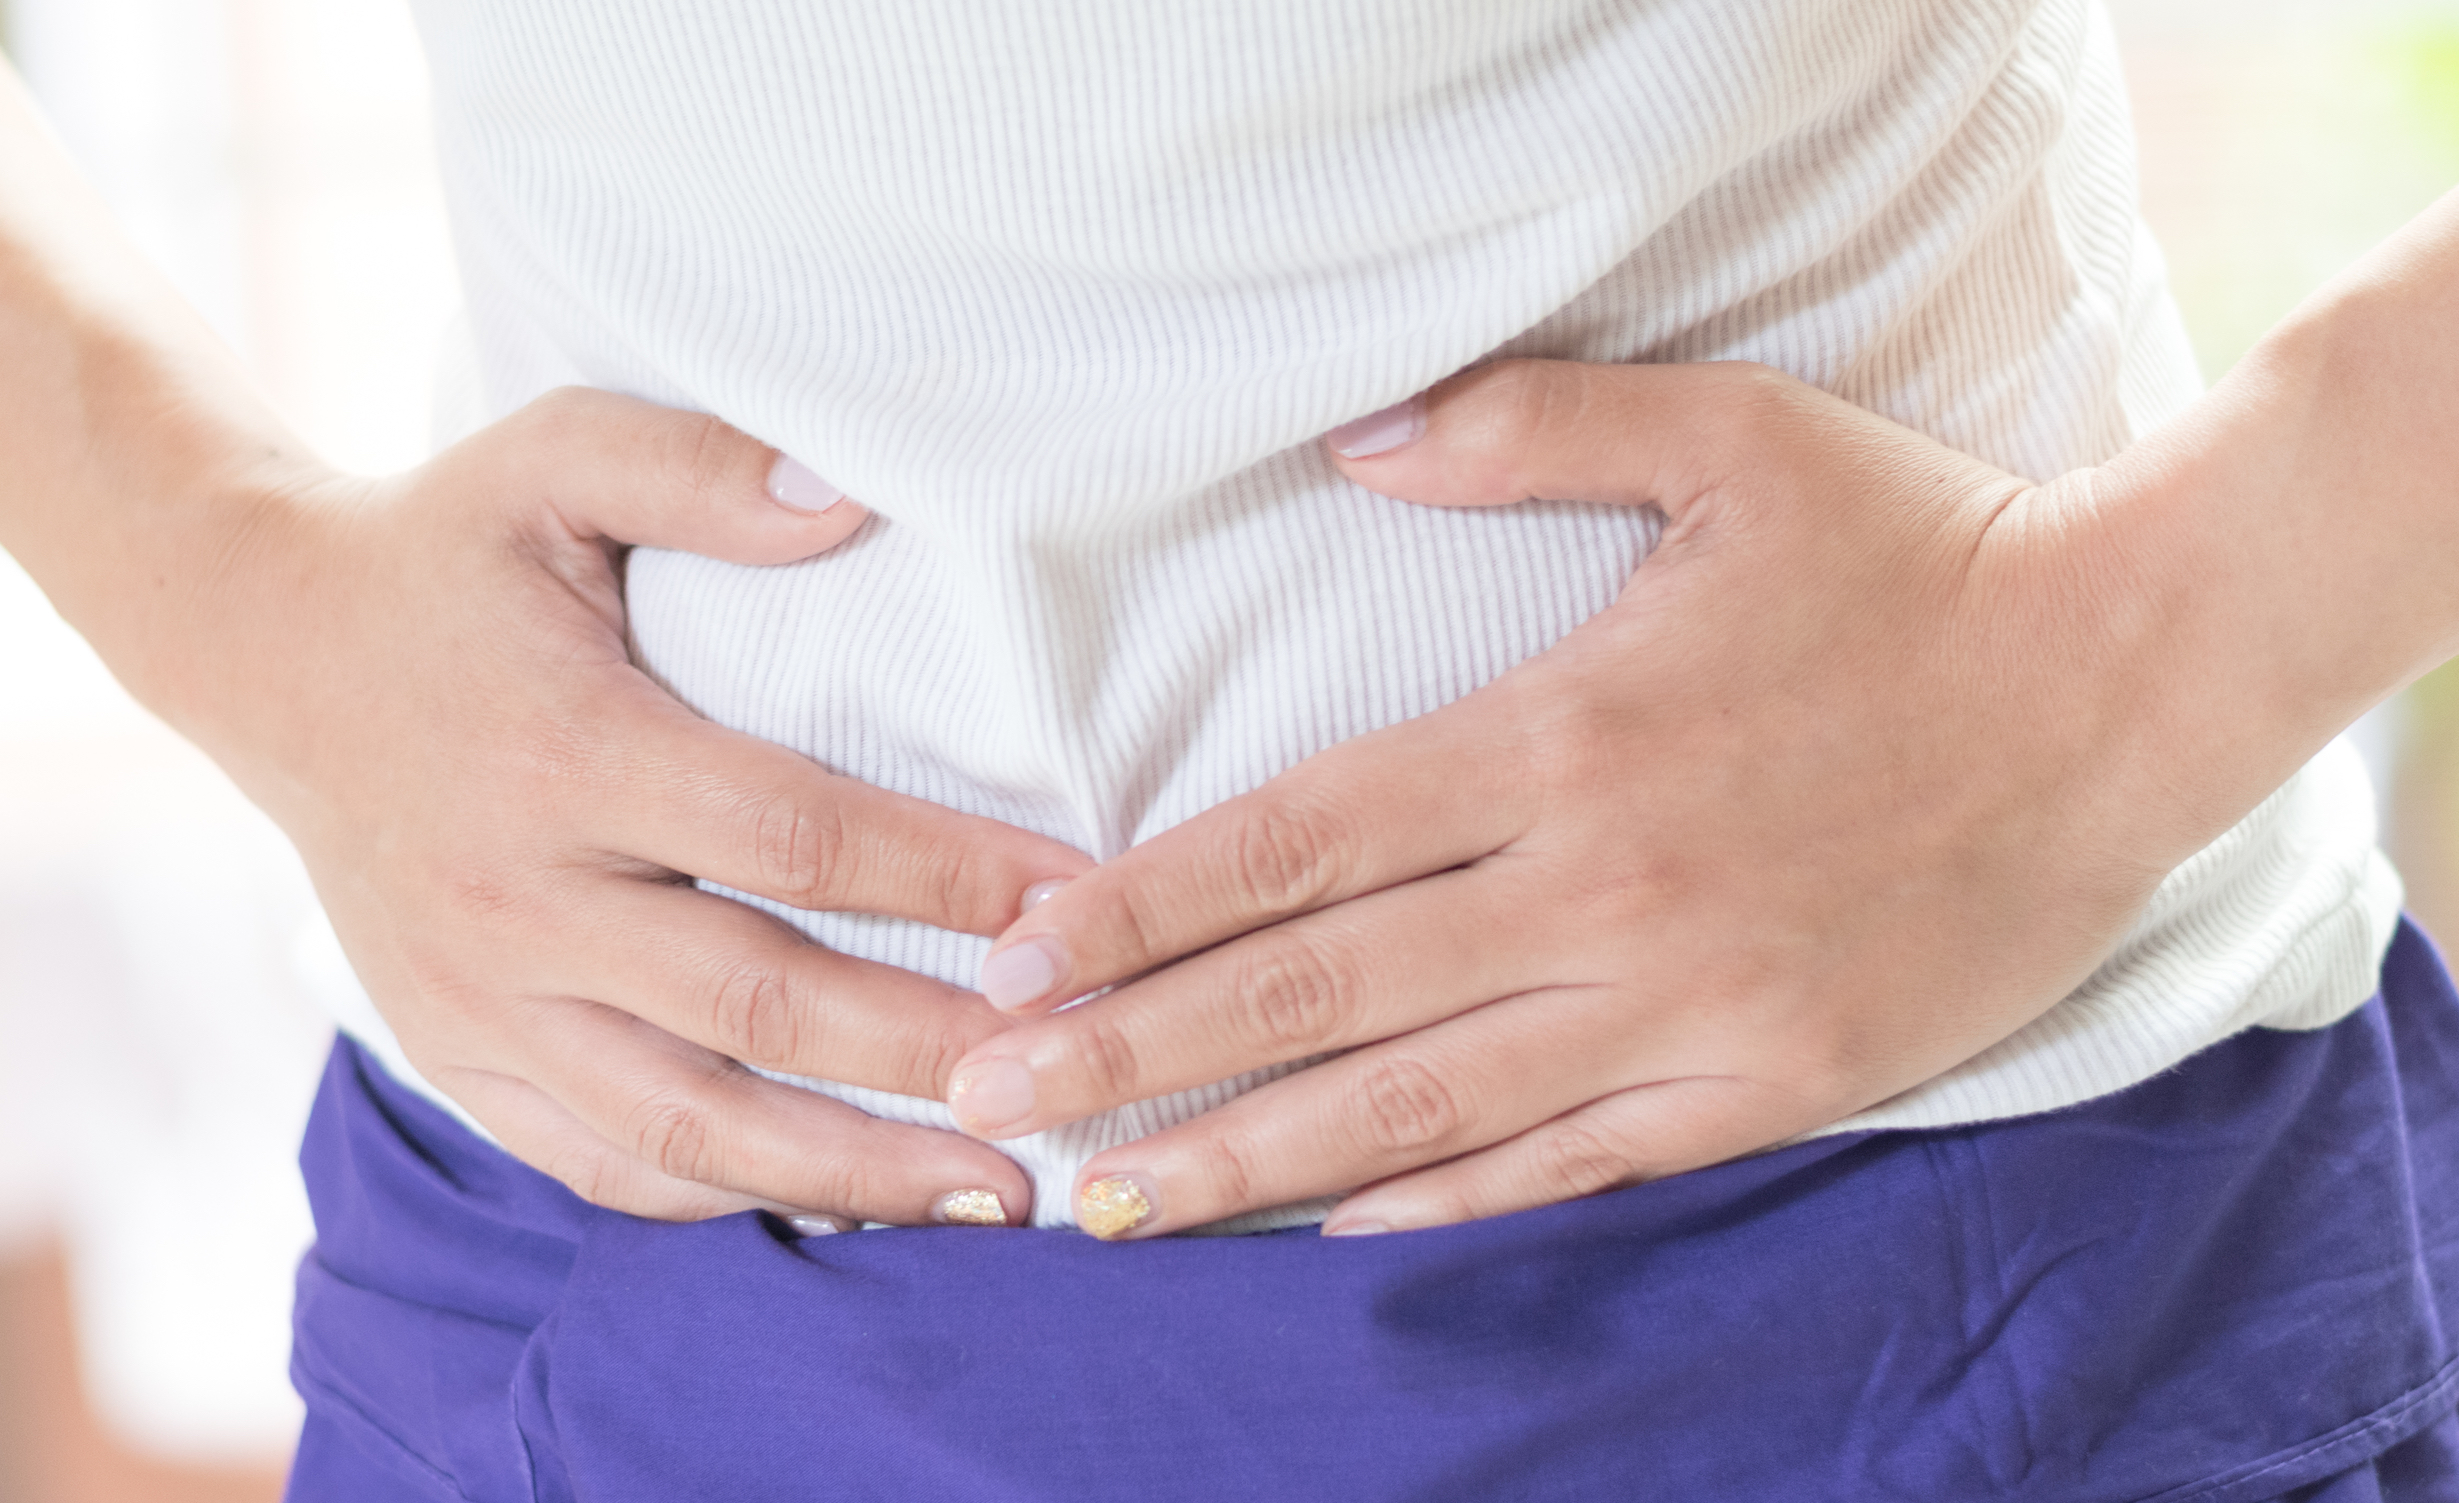 Stomach ache symptom of irritable bowel syndrome, Chronic Diarrhea, Colon, stomach pain,Crohnâ€™s Disease, Gastroesophageal Reflux Disease (GERD), gallstone,gastric pain, Premenstrual syndrome or PMS